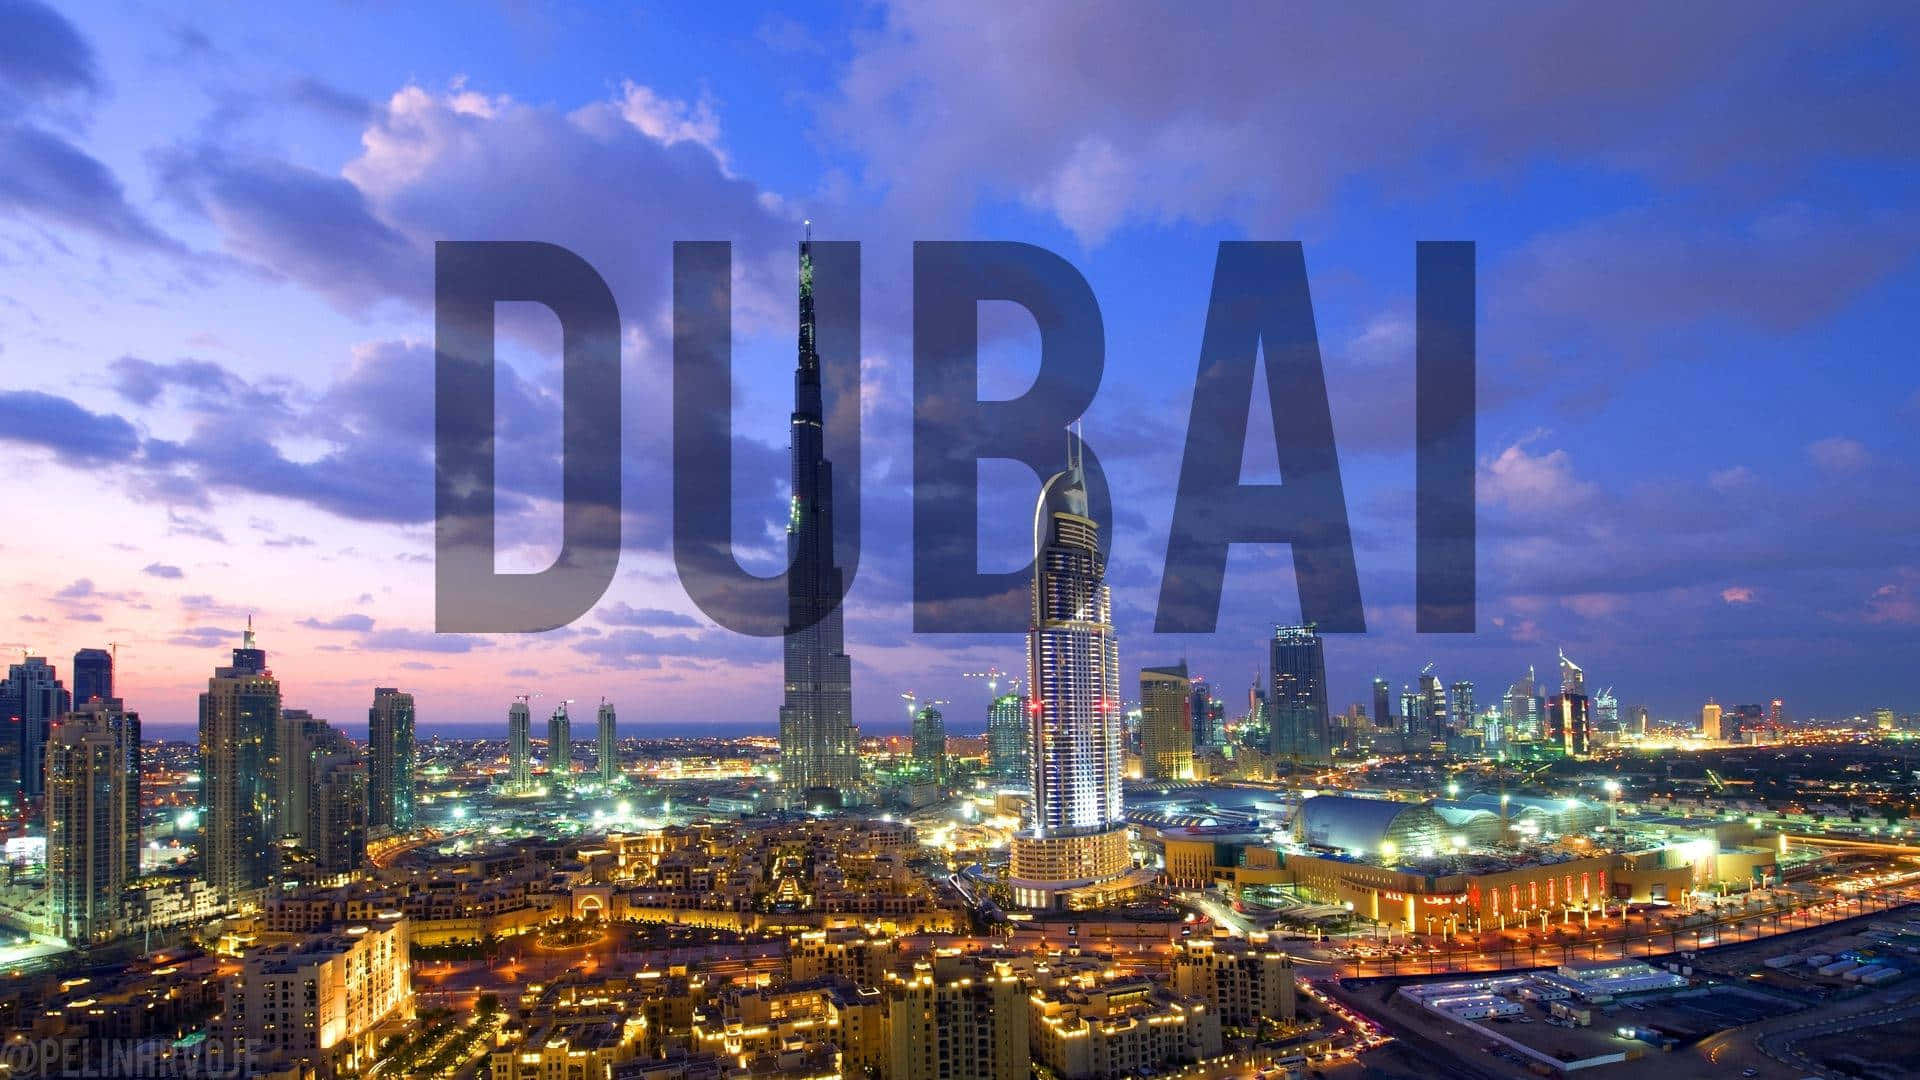 500 Best Dubai Pictures HD  Download Free Images on Unsplash